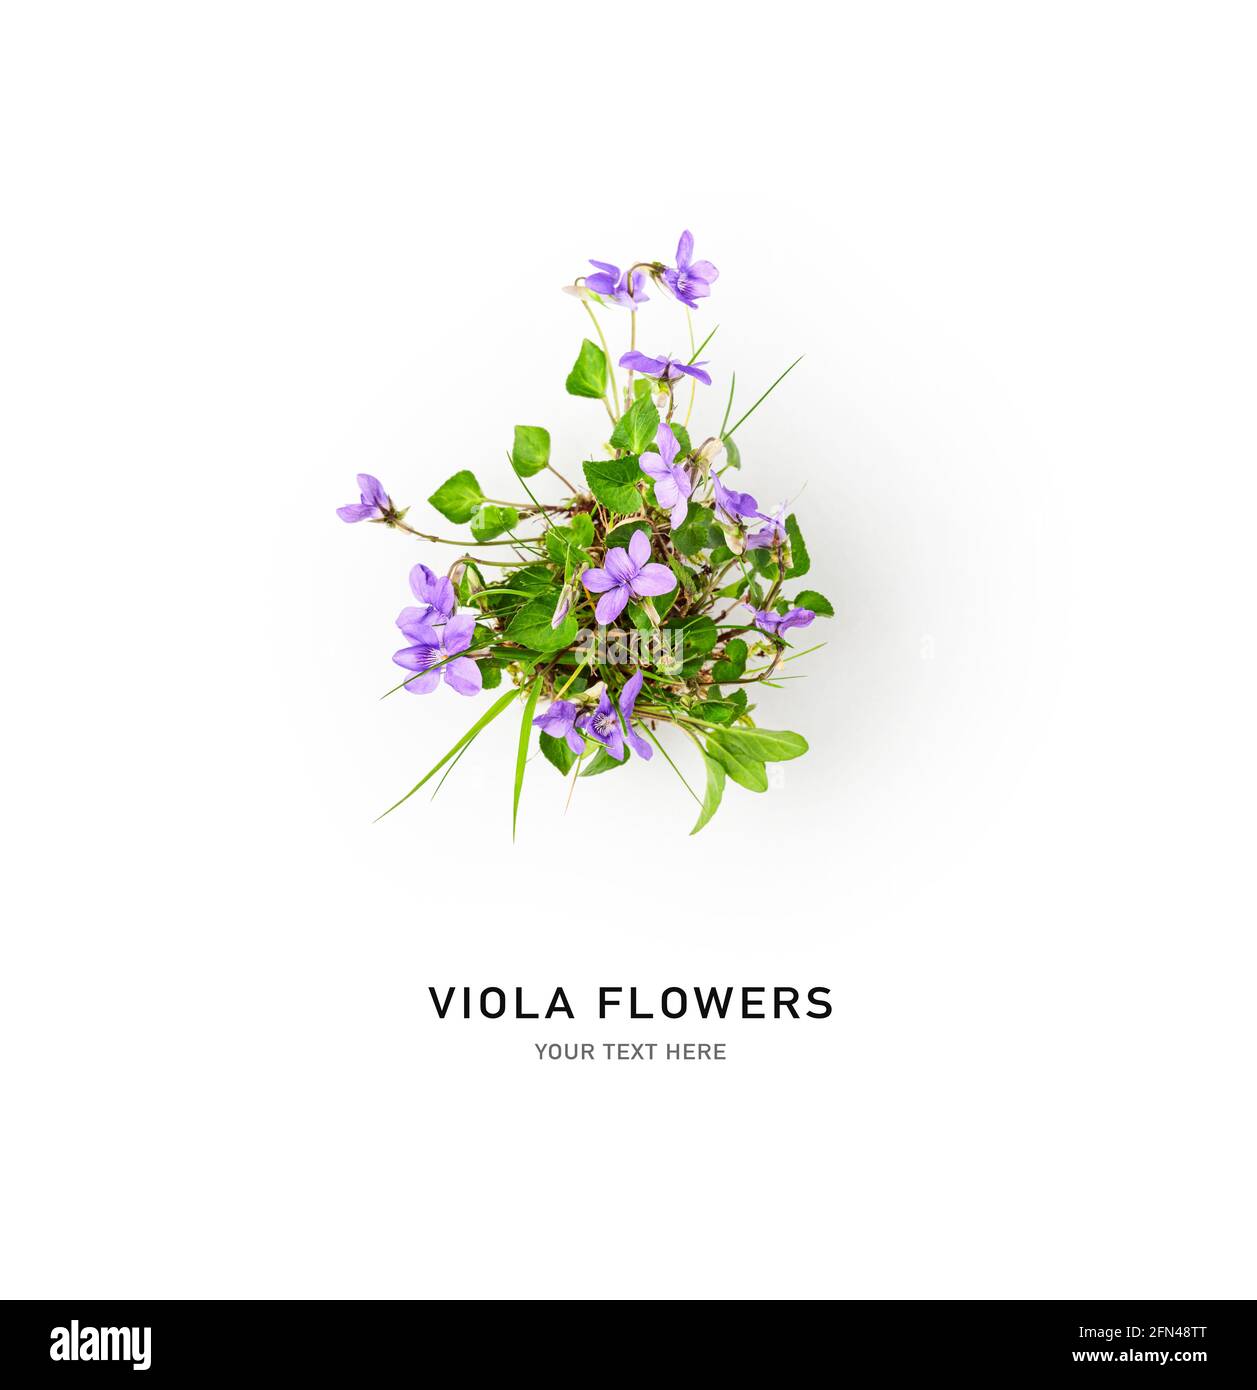 Viola flower creative composition. Dog violet or viola riviniana flowers with leaves on white background. Floral arrangement, design element. Springti Stock Photo